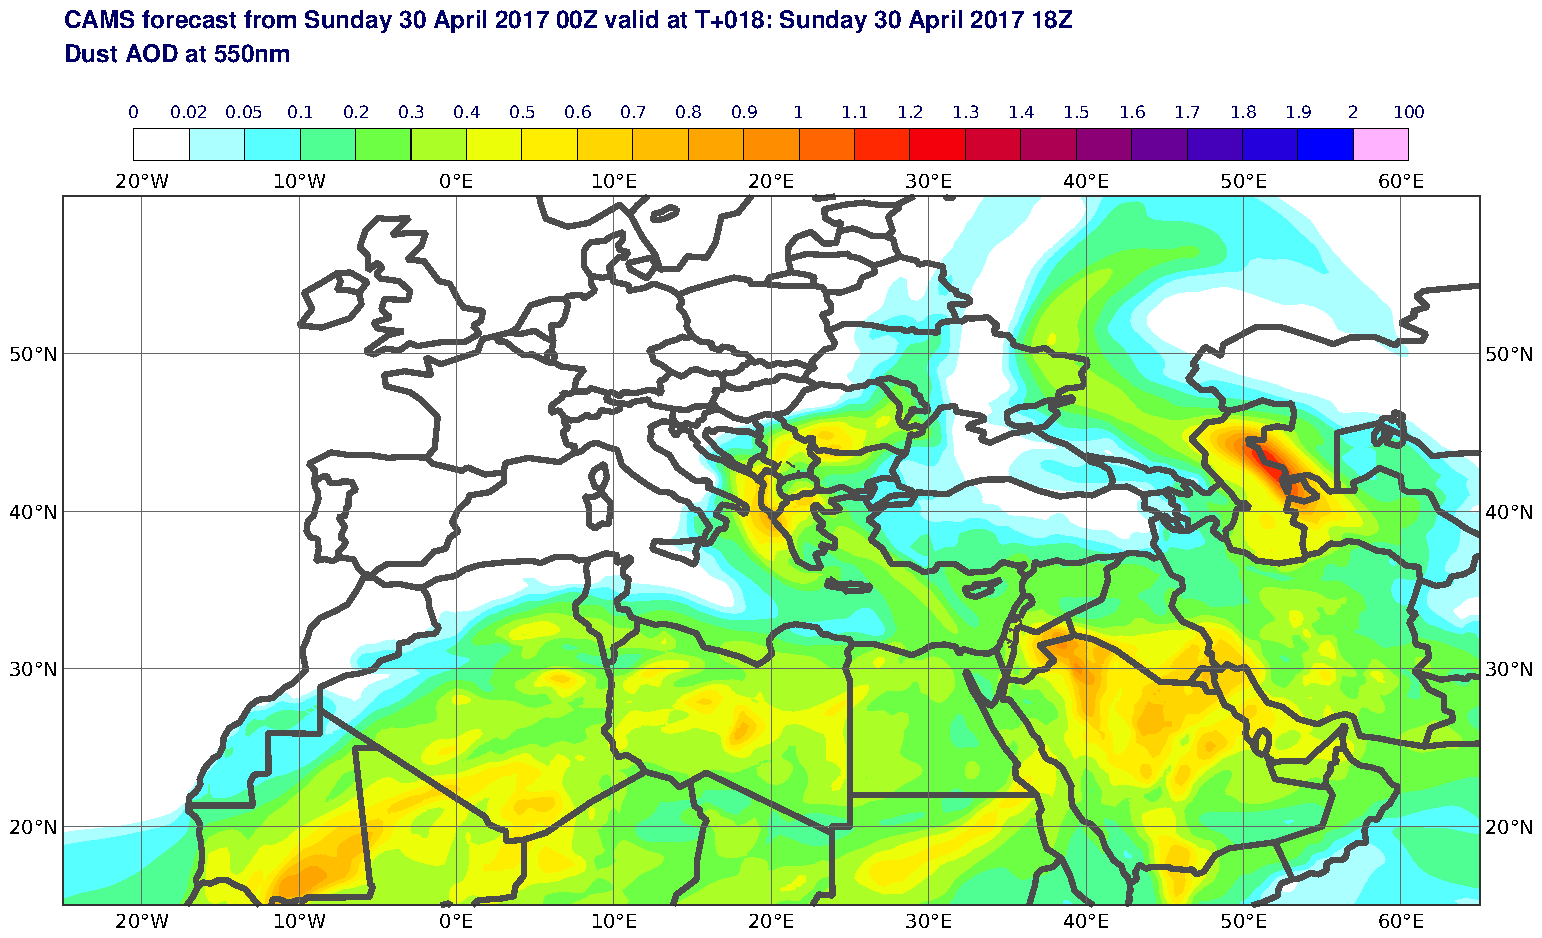 Dust AOD at 550nm valid at T18 - 2017-04-30 18:00